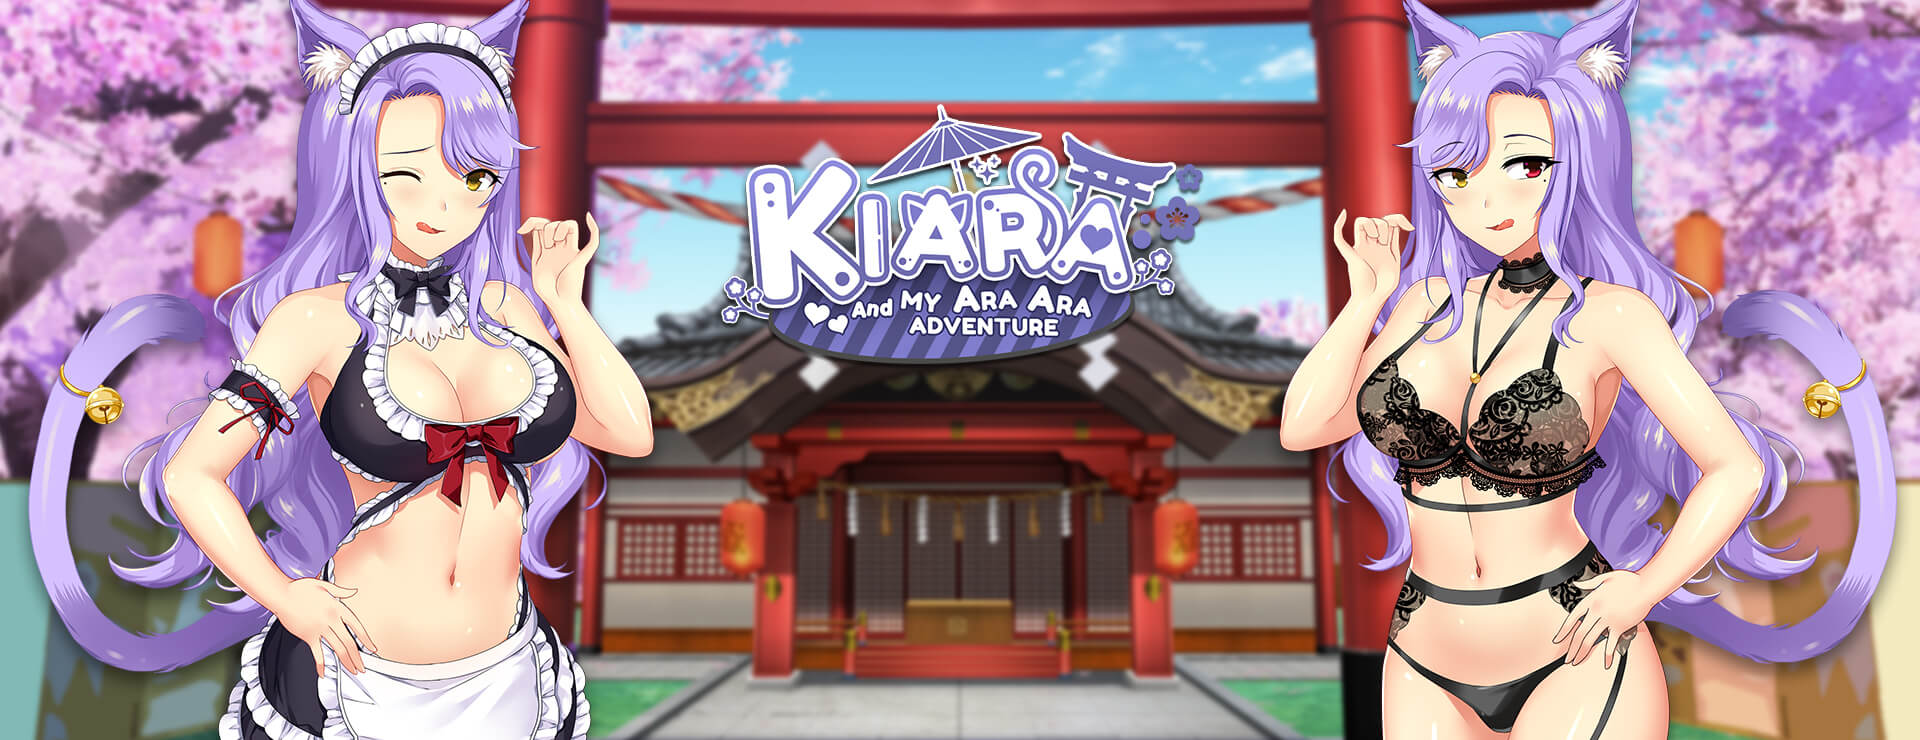 Kiara and my Ara Ara Adventure - Visual Novel Game